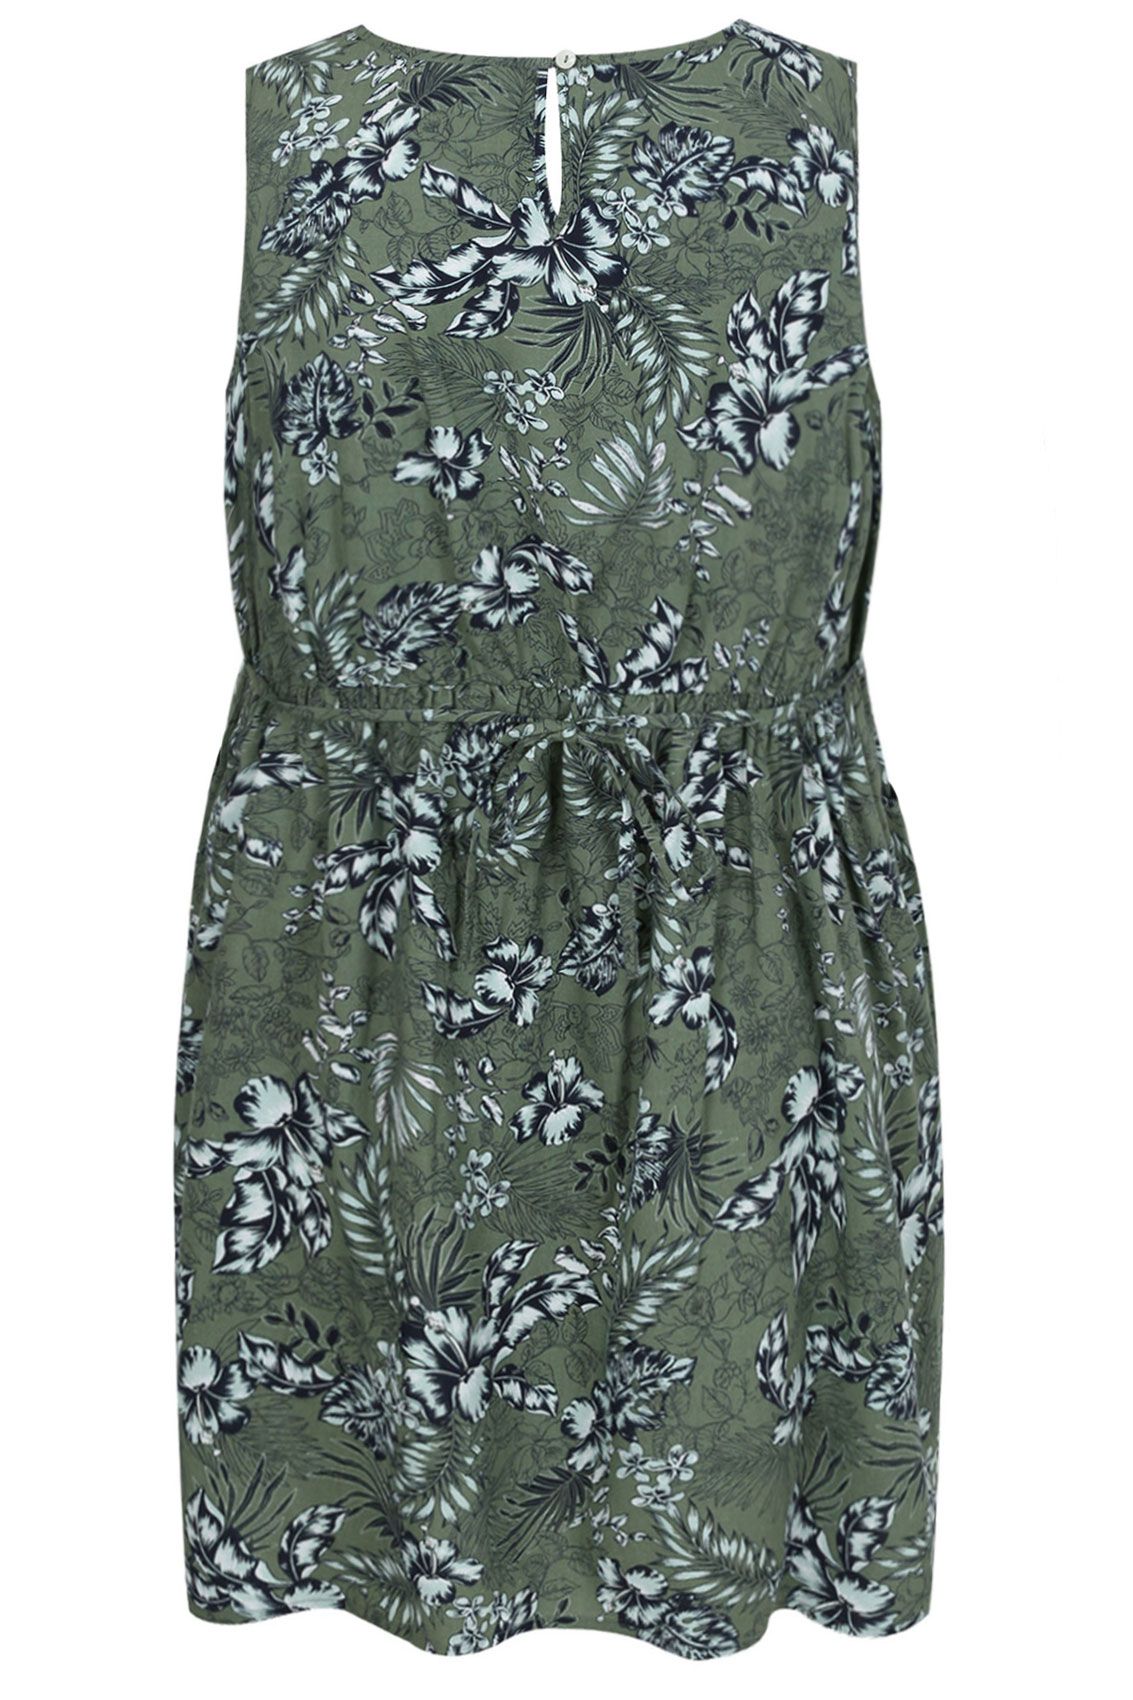 Green Botanical Palm Print Sleeveless Dress With Pockets Plus Size 14 to 32